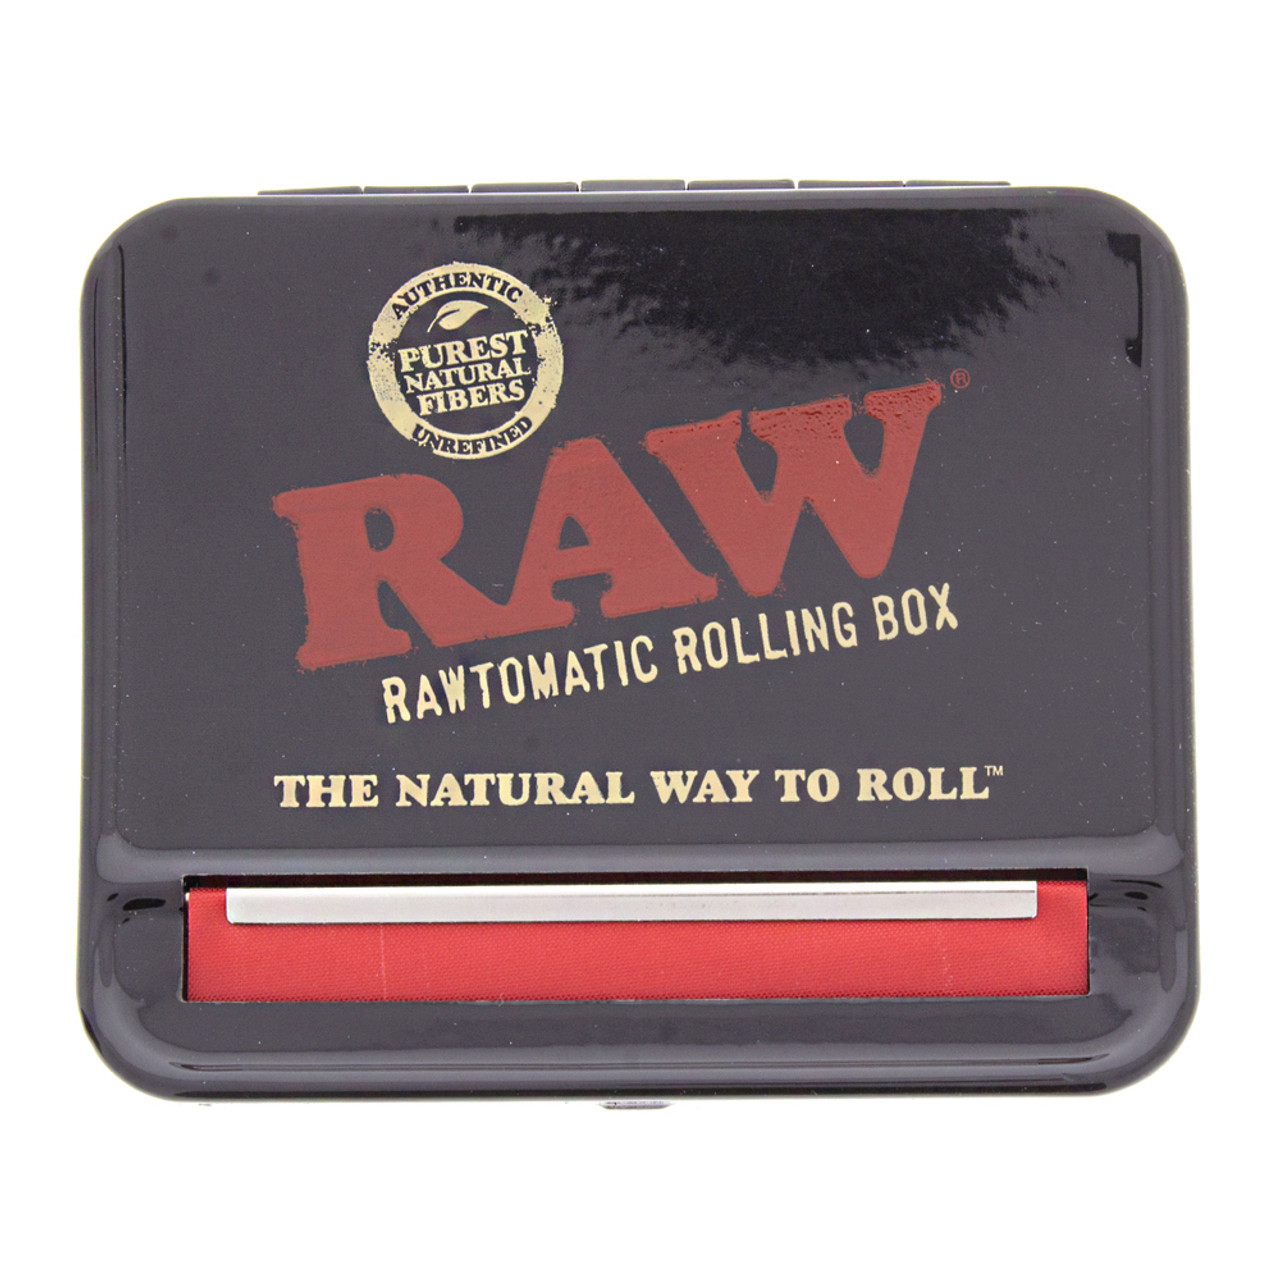 AWESOME Smoking Kit in case has RAW Rolling Machine & 3 sizes RAW